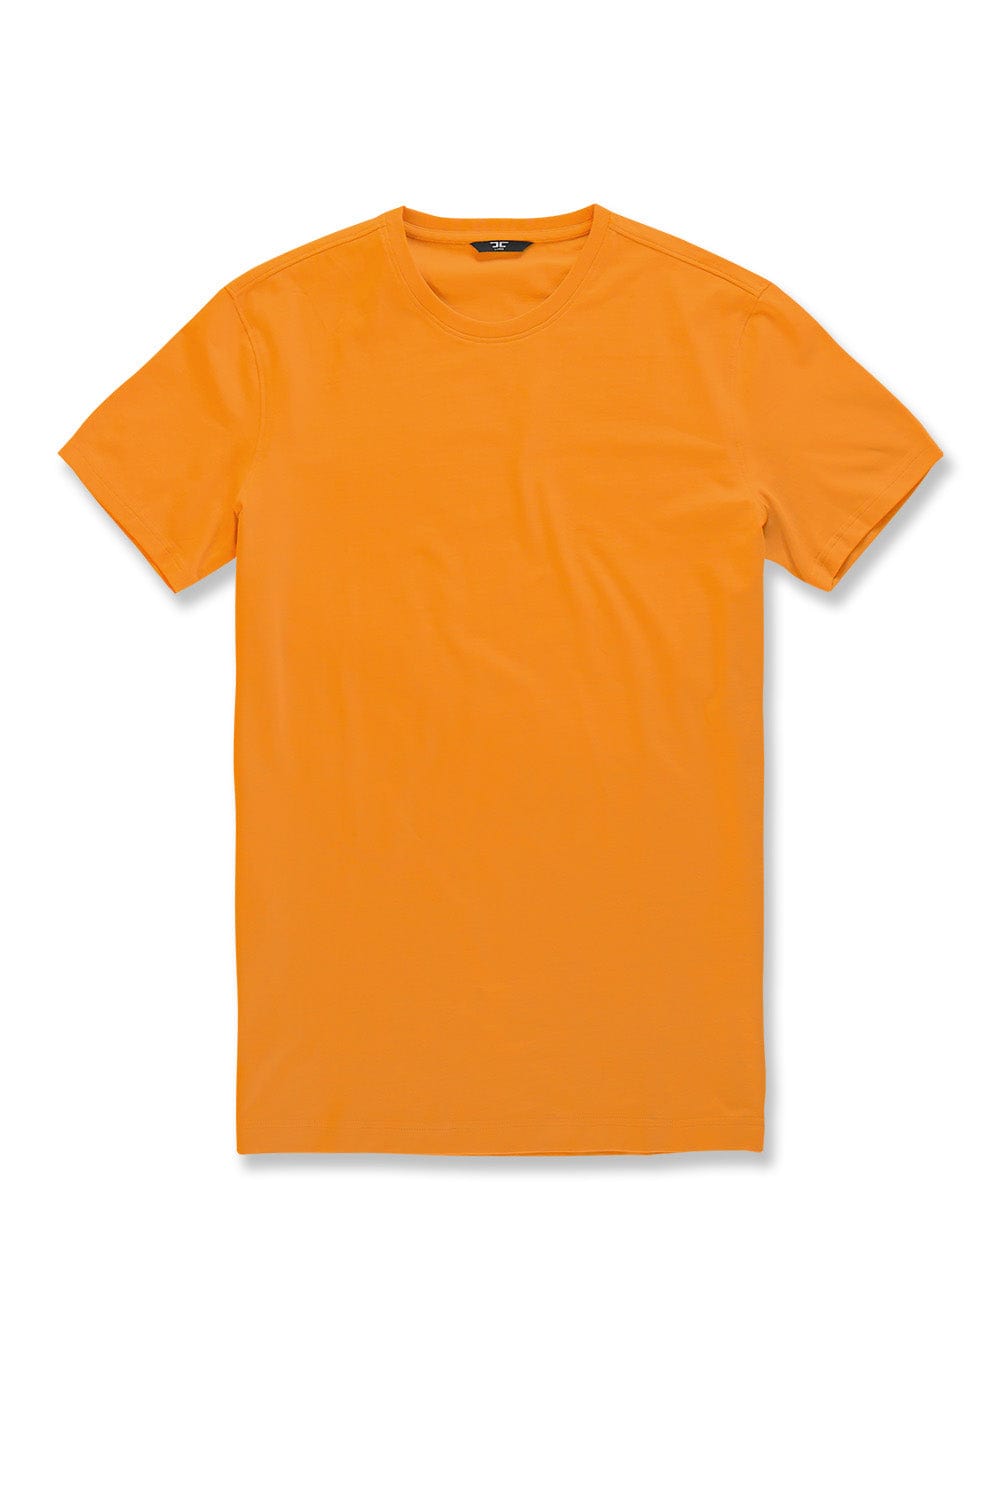 Big Men's Premium Crewneck T-Shirt (University Gold)